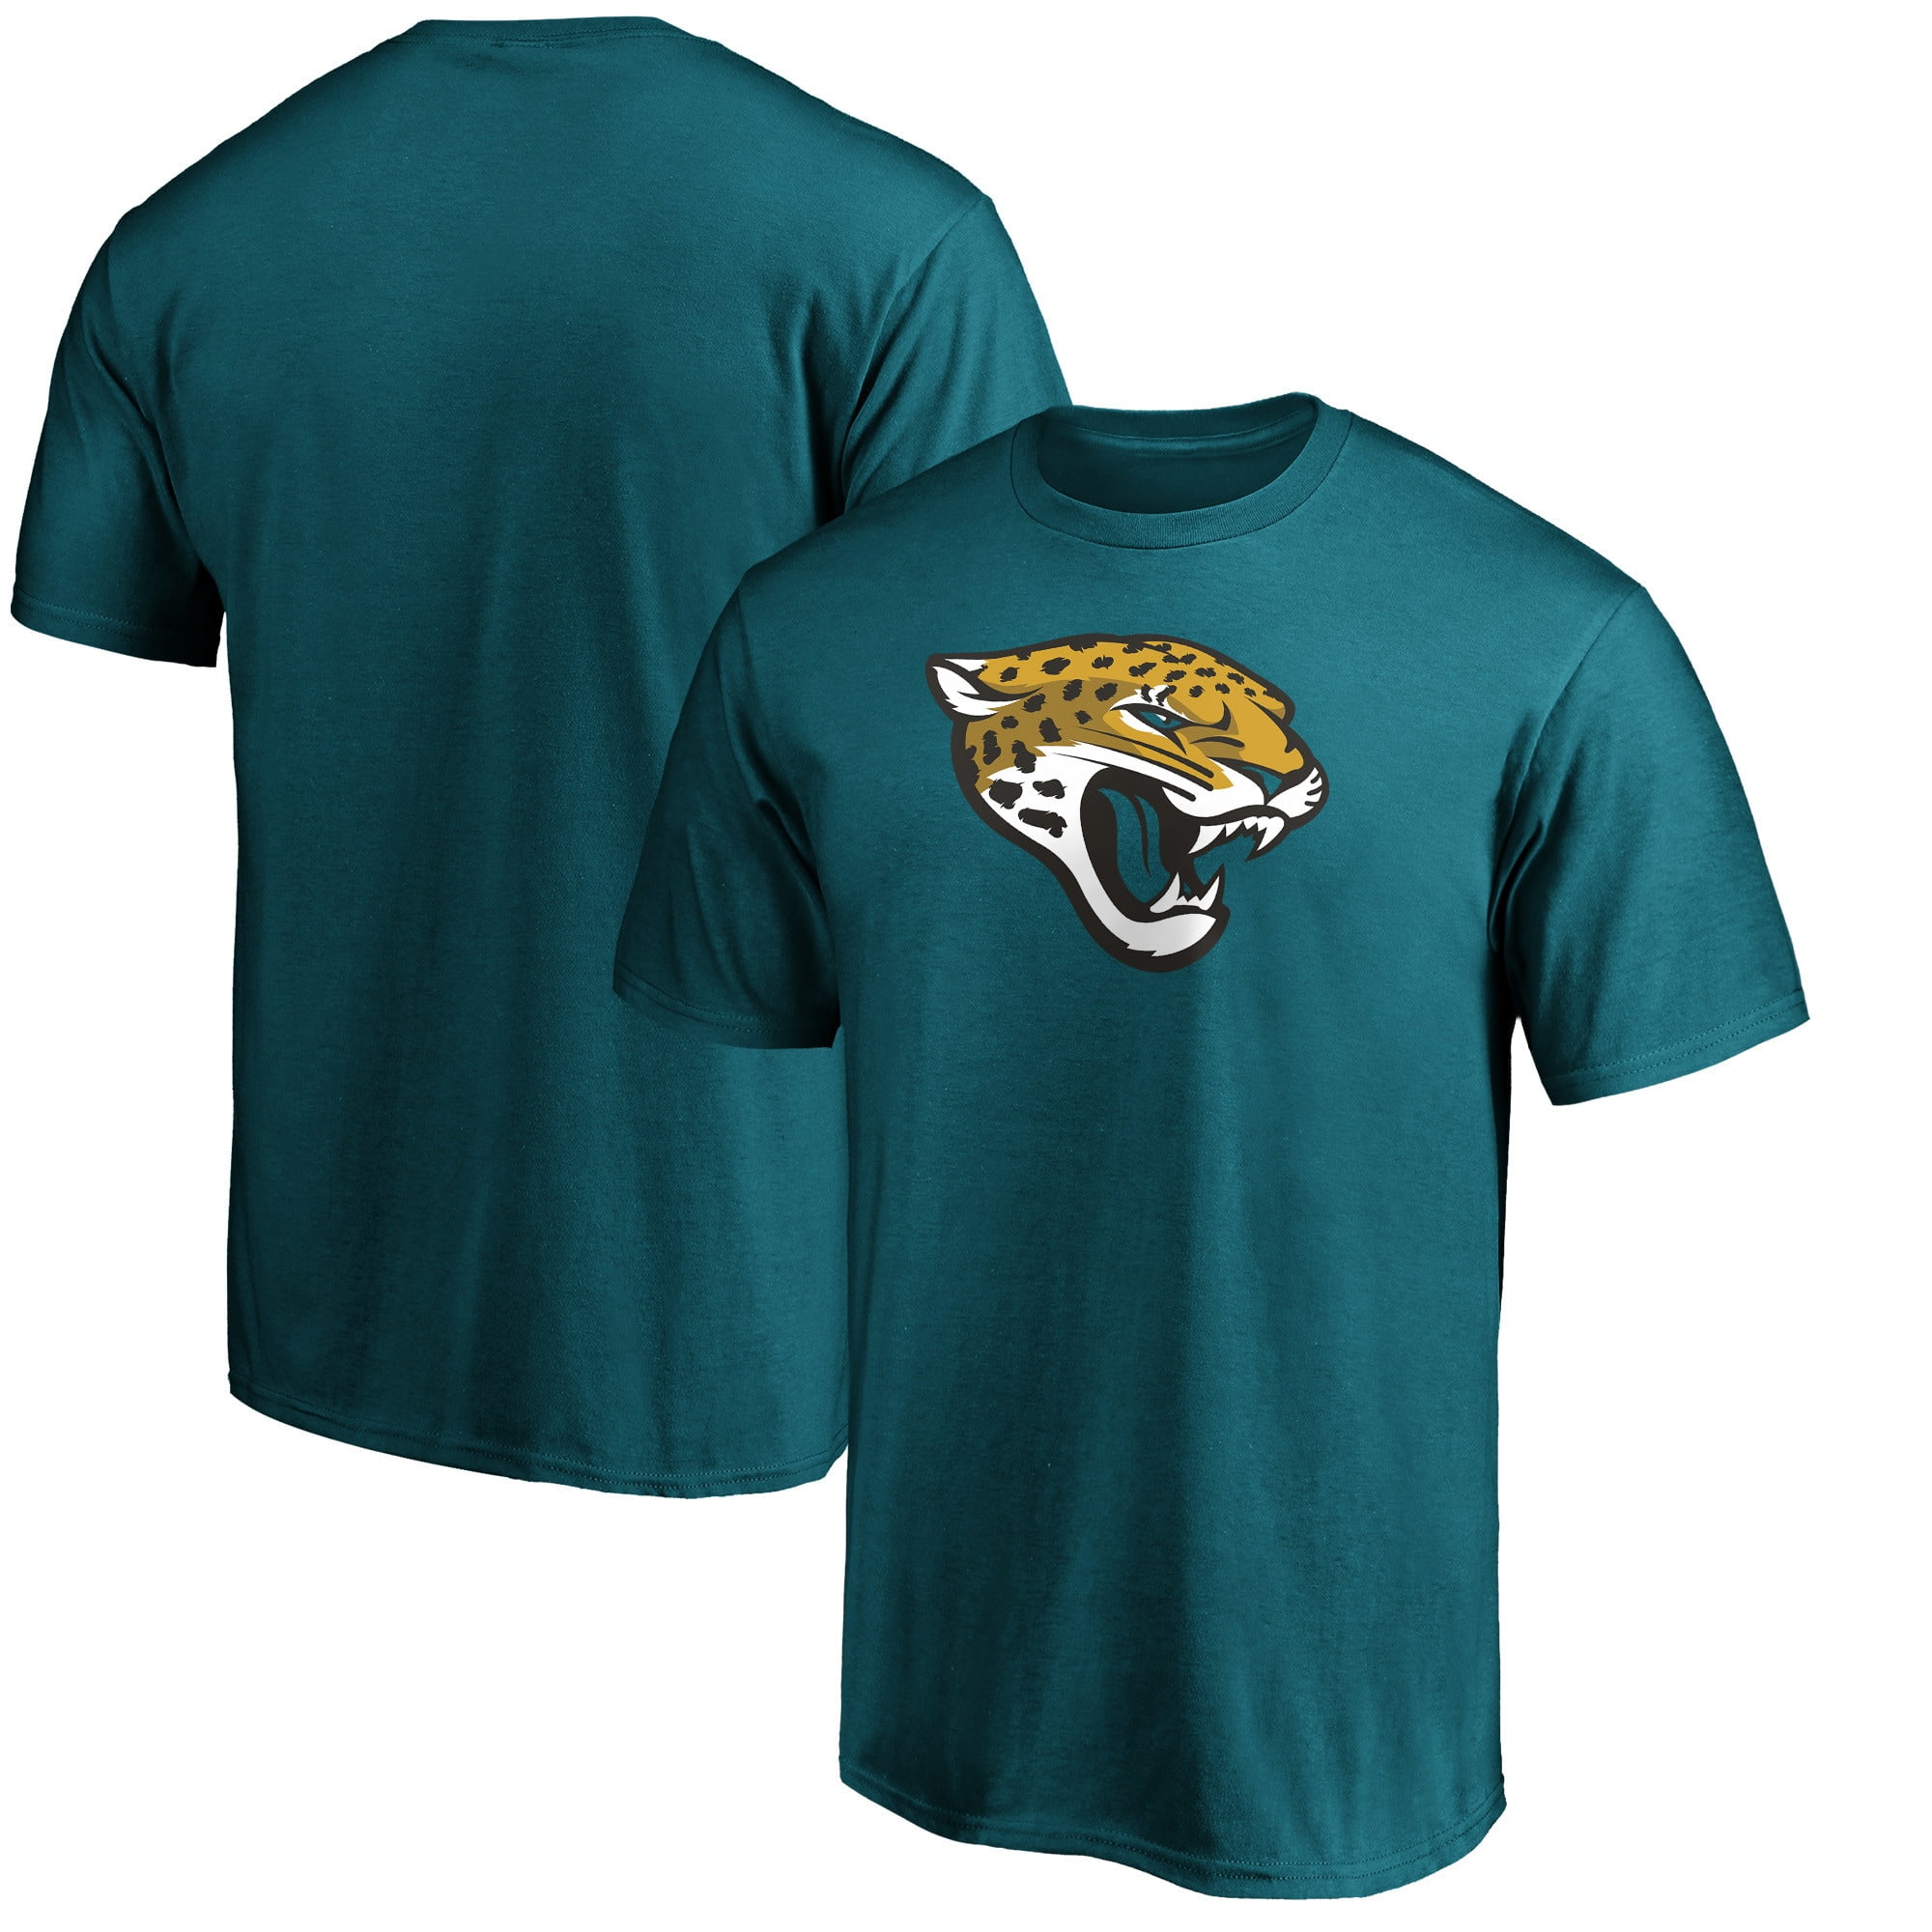 Jacksonville Jaguars T-Shirts - Walmart.com